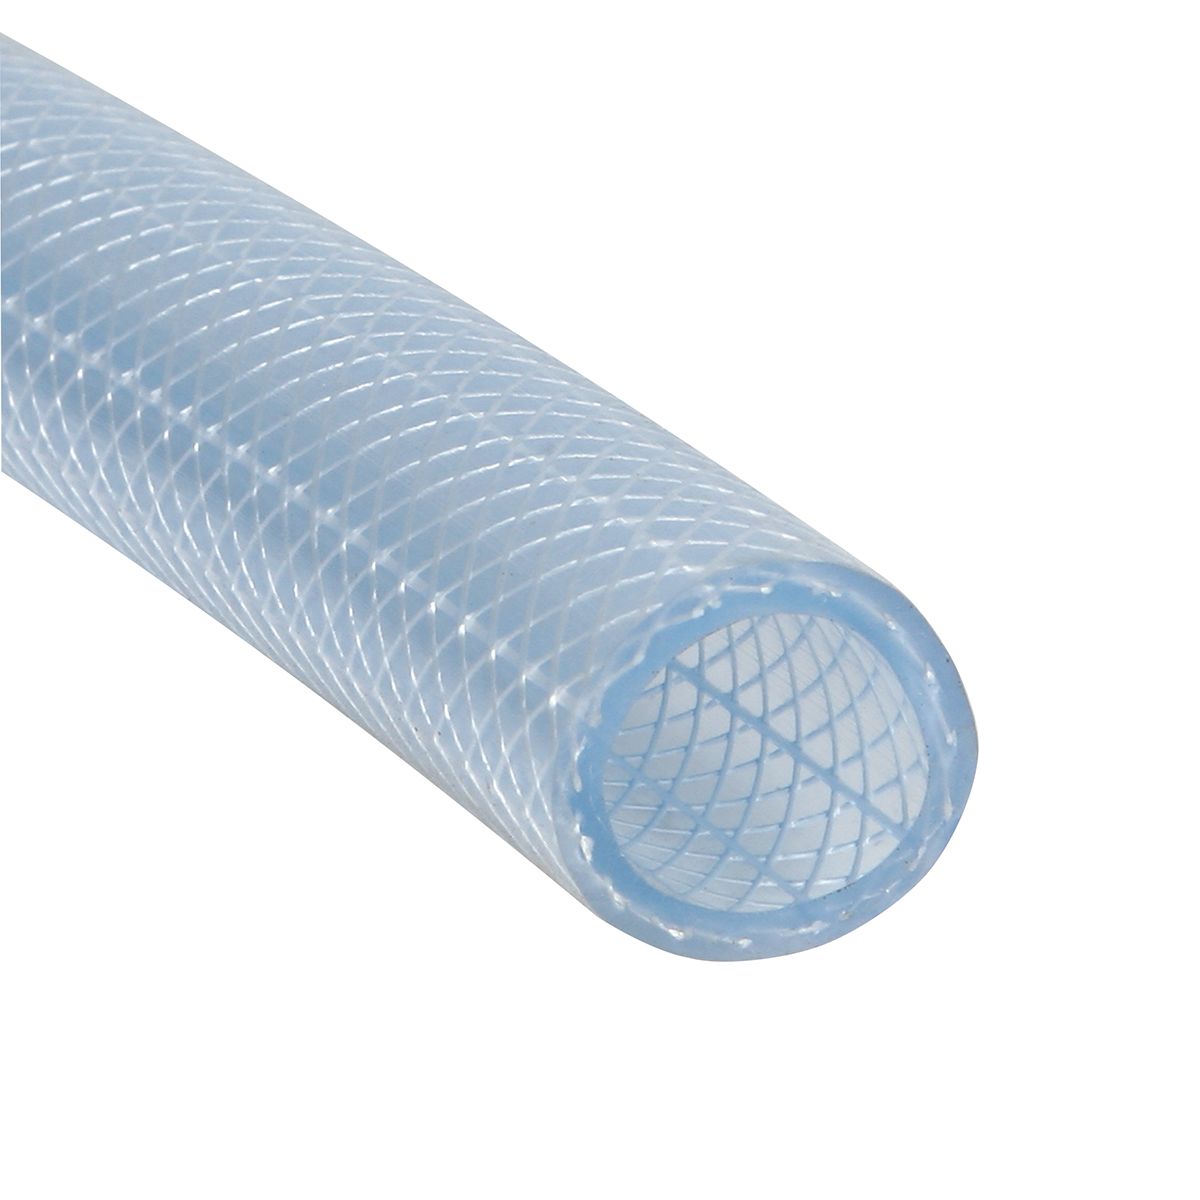 1/2" inside diameter 20-feet Clear PVC vinyl tubing/flexible hose 